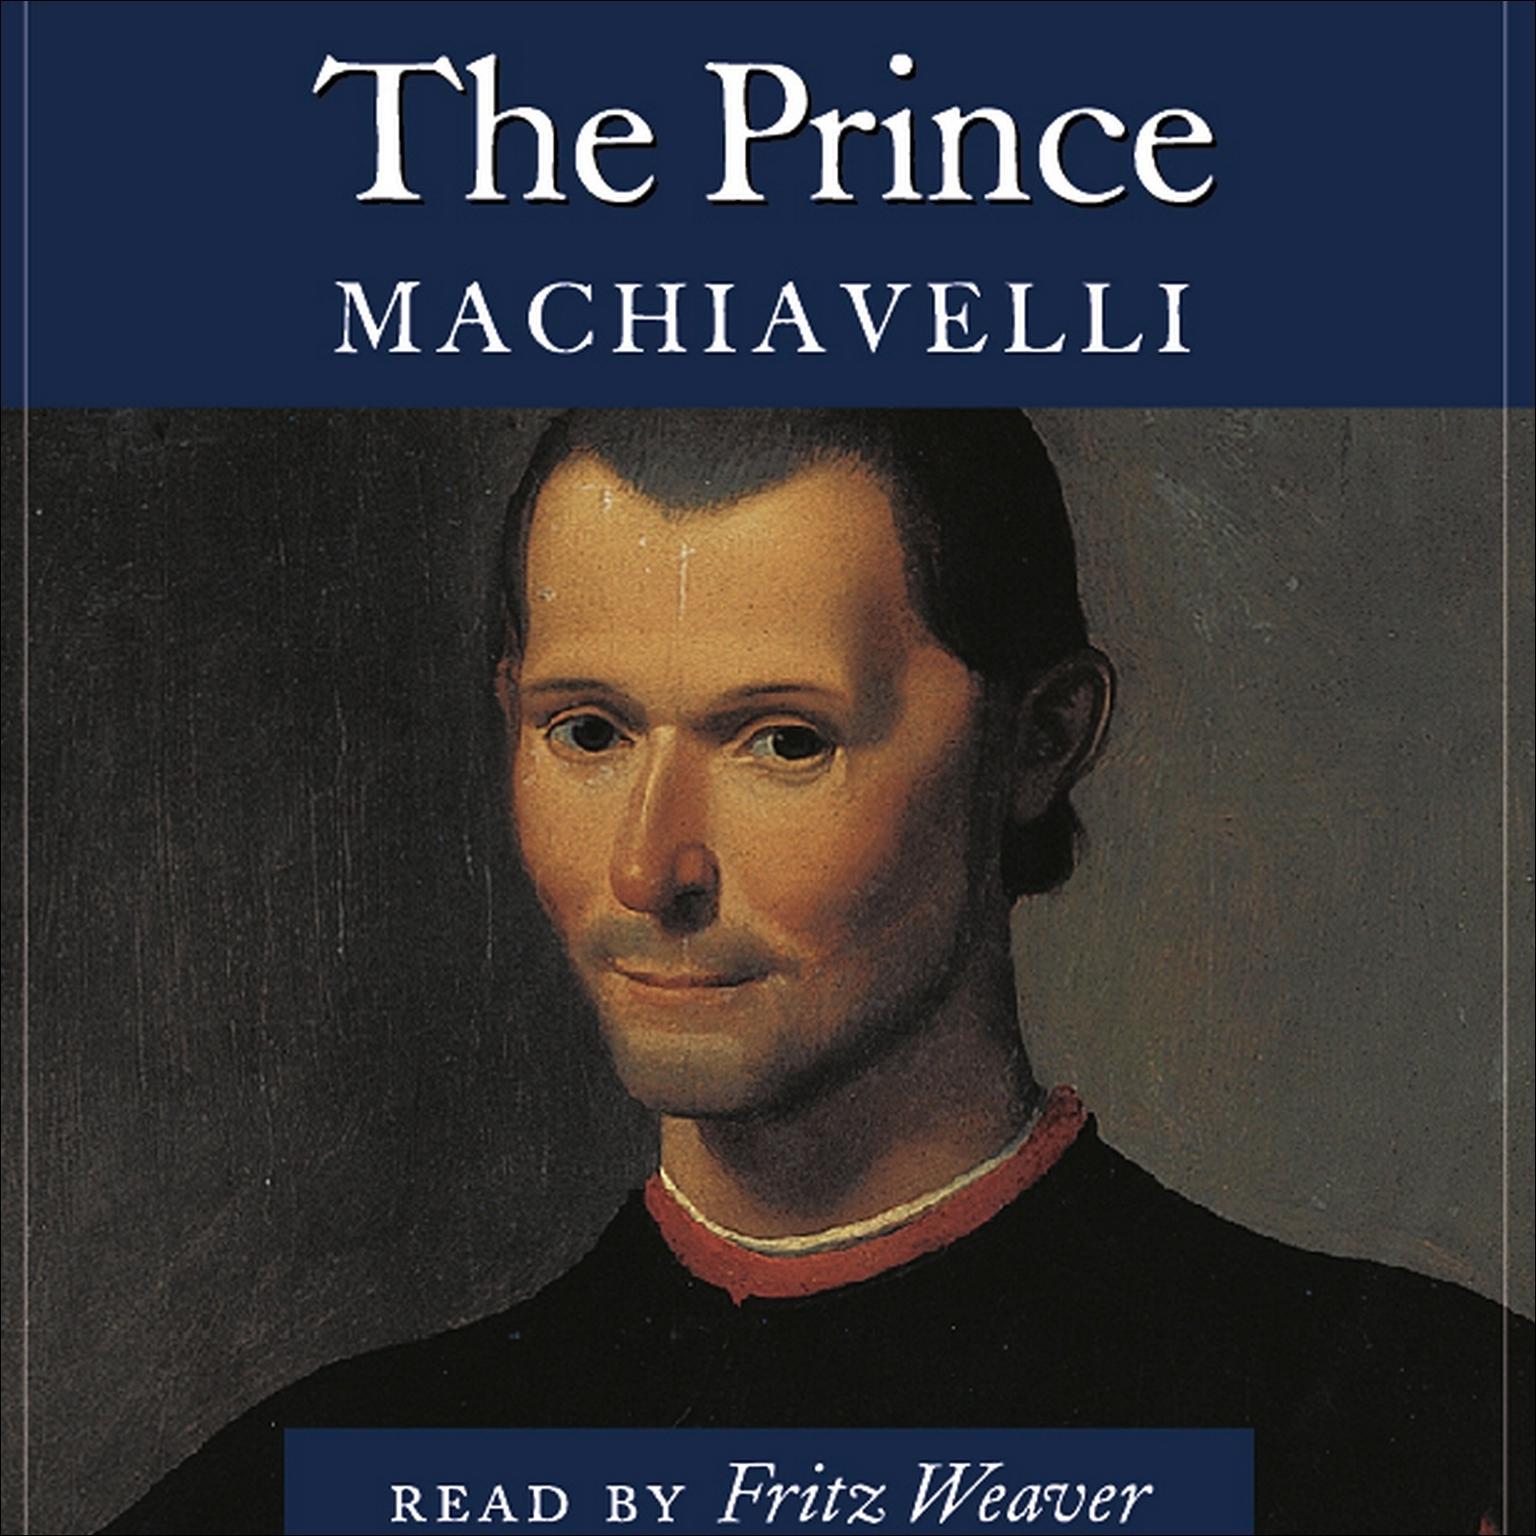 The Prince Audiobook, by Niccolò Machiavelli